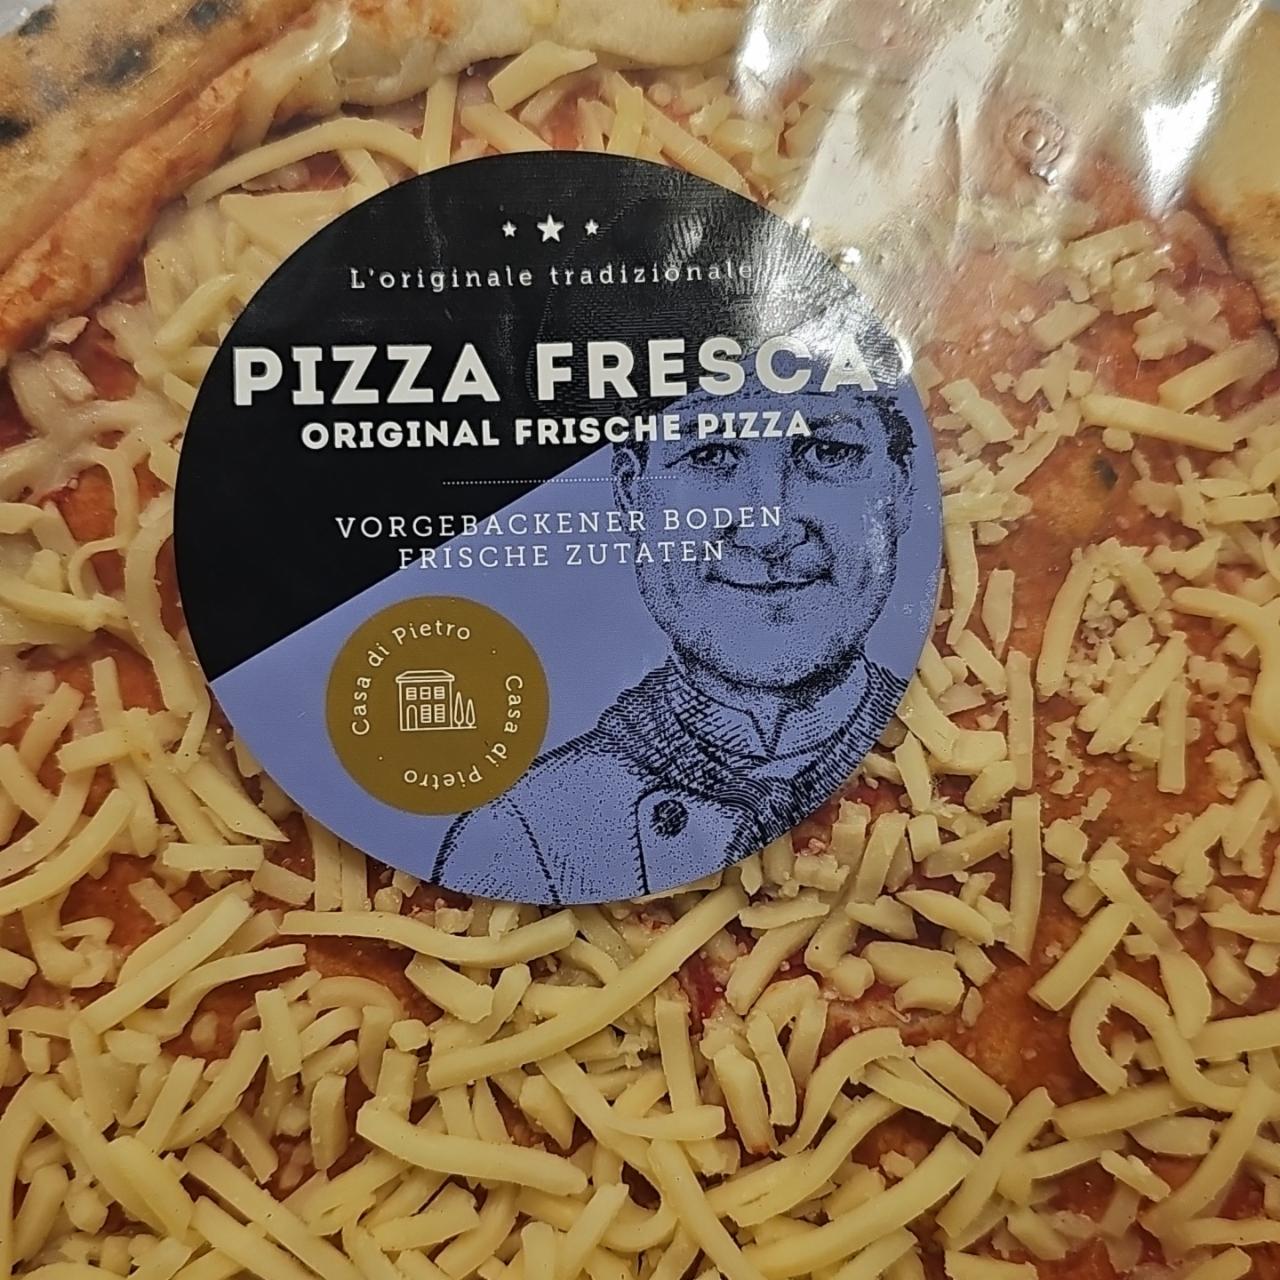 Fotografie - Original frische pizza Margherita Pizza fresca